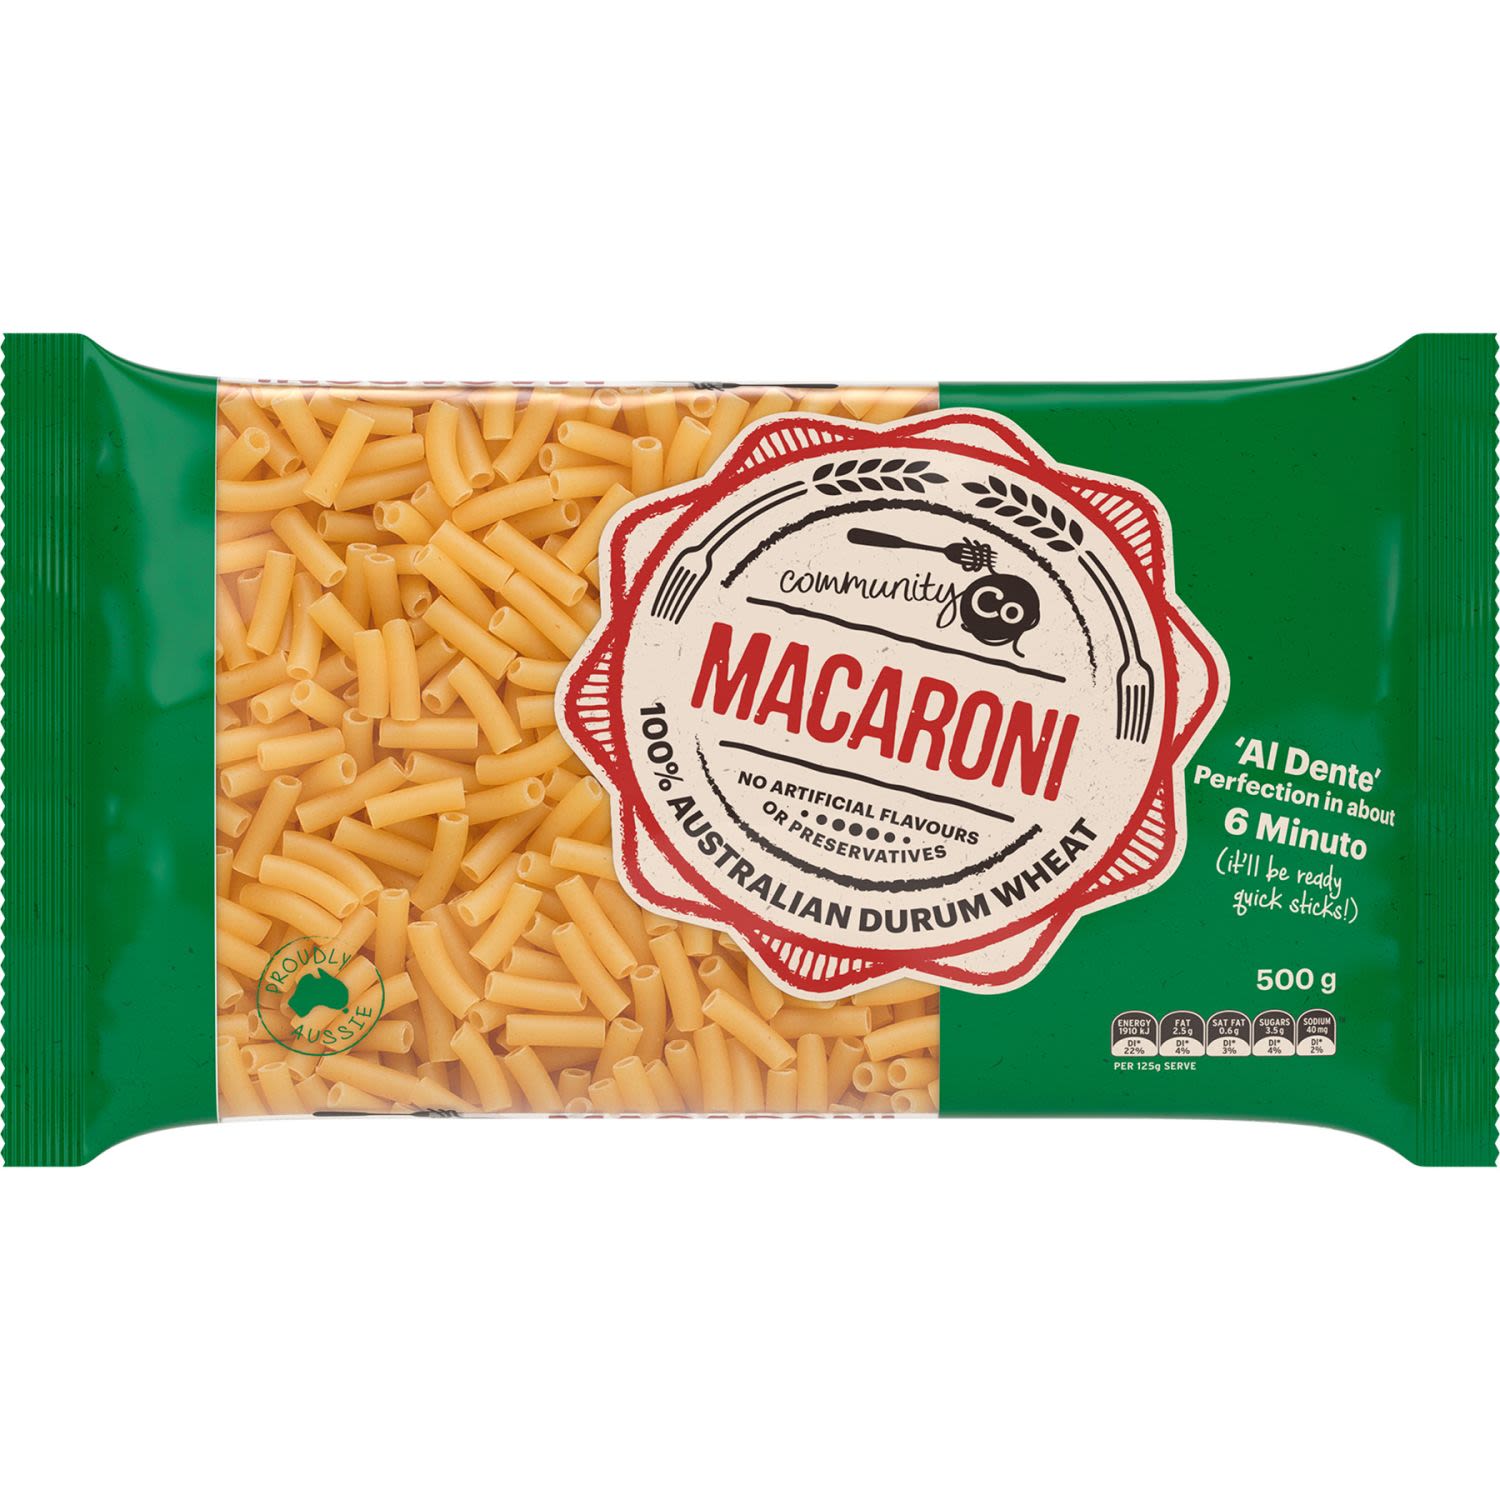 Community Co Macaroni 38, 500 Gram